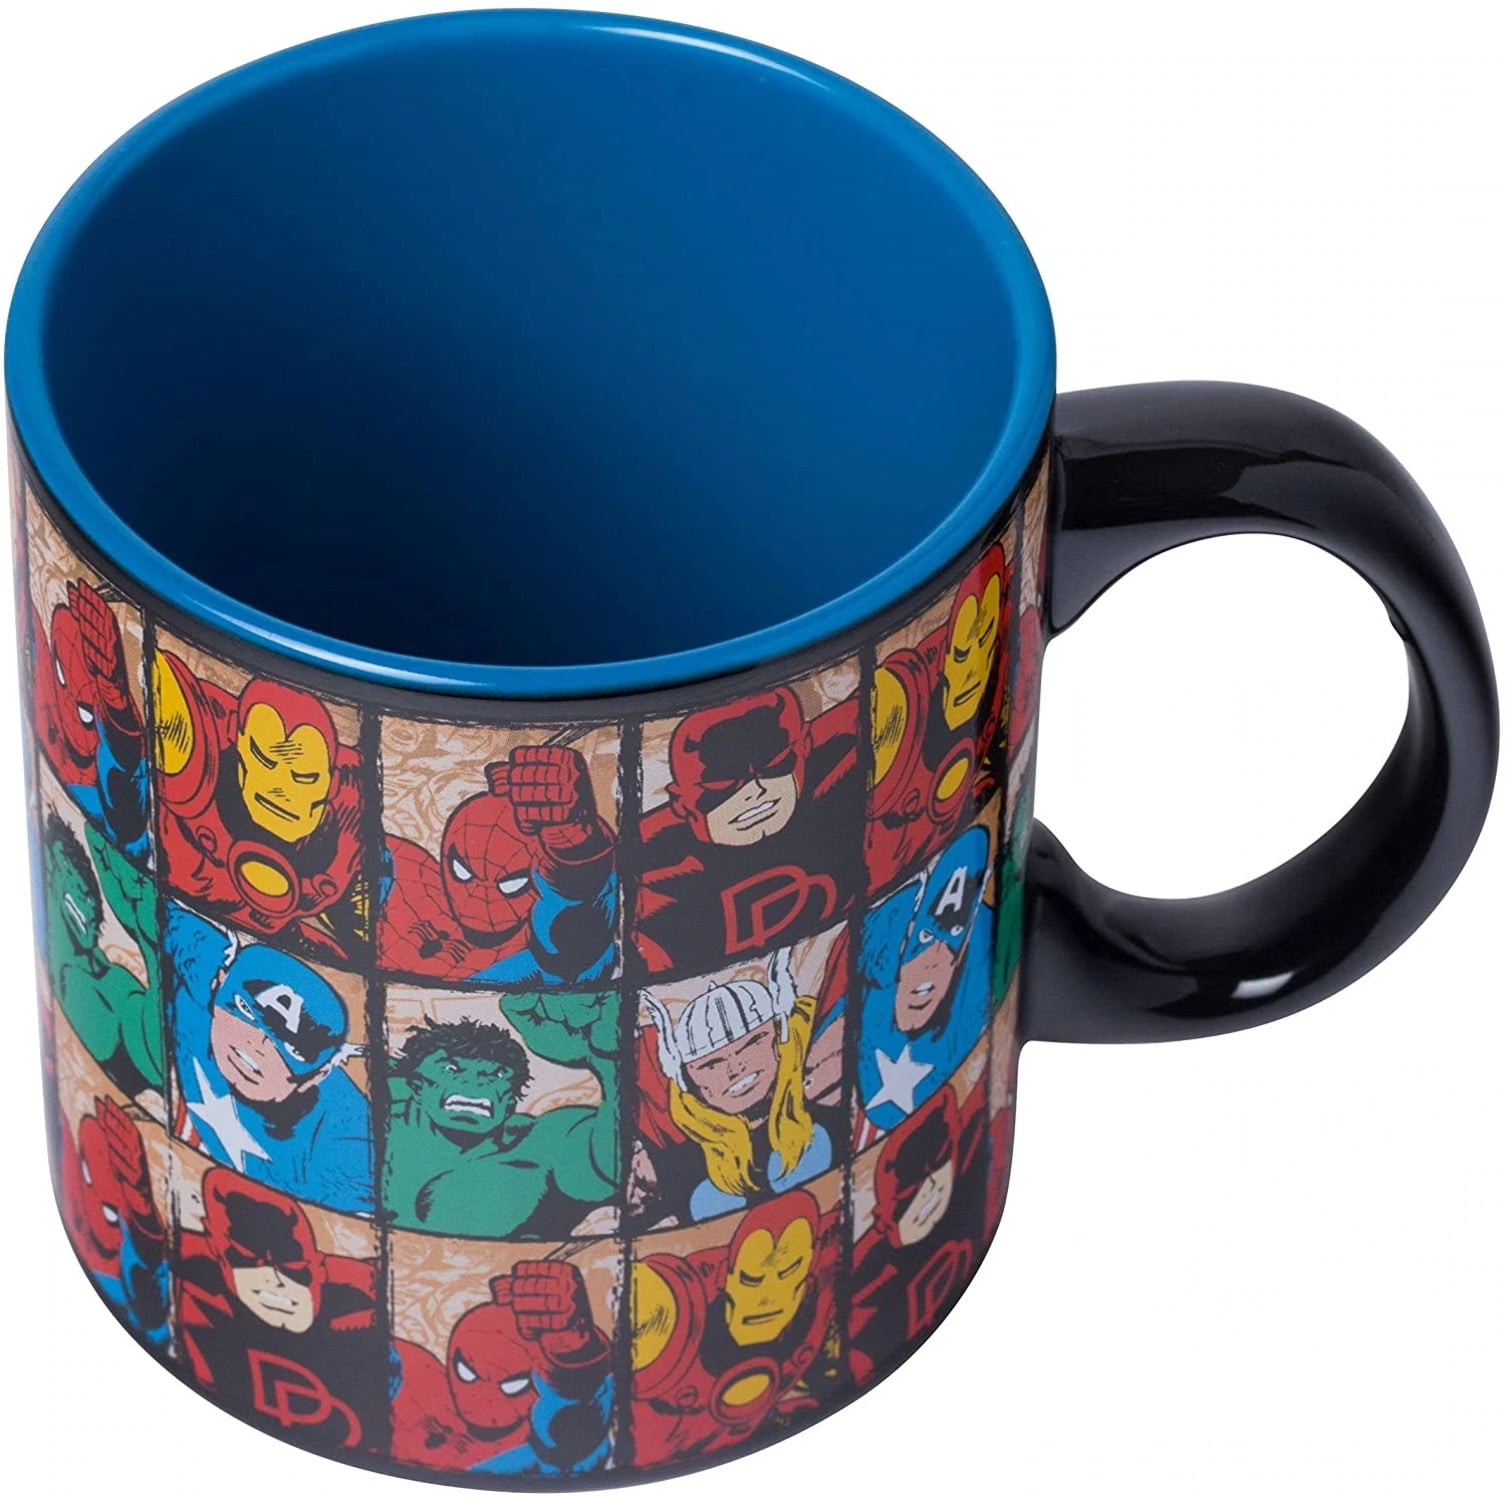 Spiderman Coffee Mugs Funny Mug Drinkware for Kids Cups Marvel Superhero  Gift for him Gift for her Christmas Gift Birthday Gift Party Gift